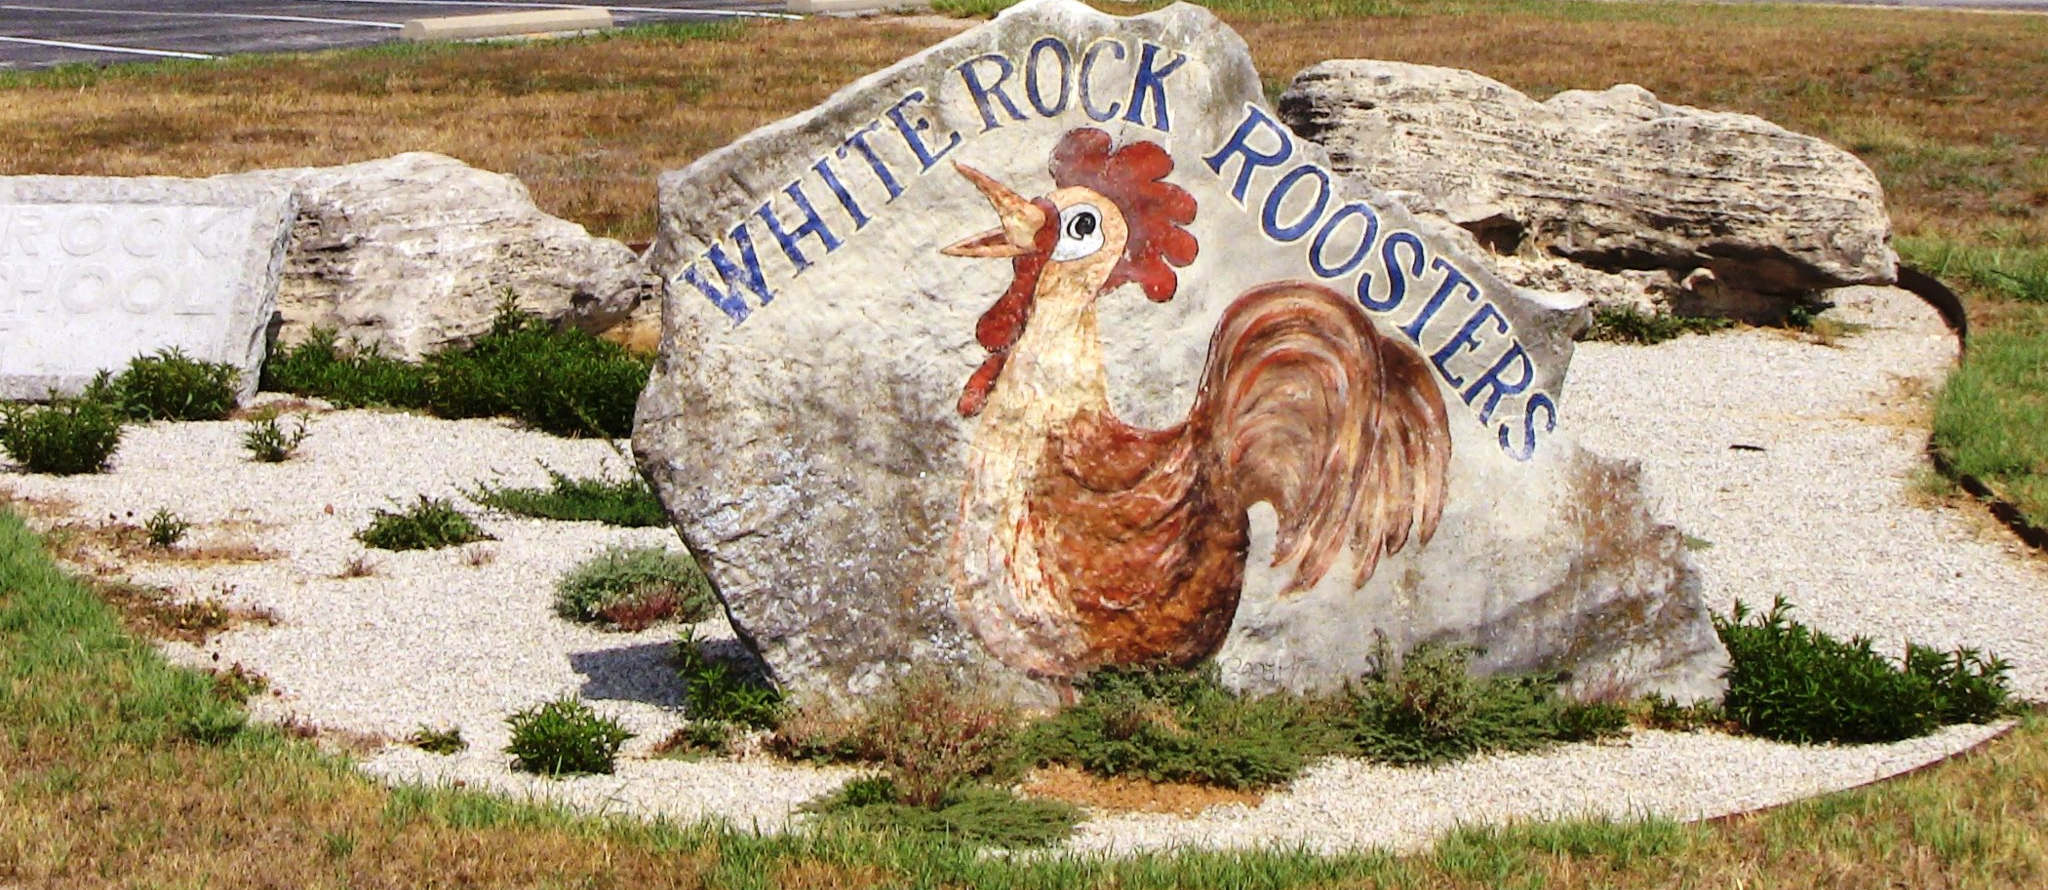 White Rock School